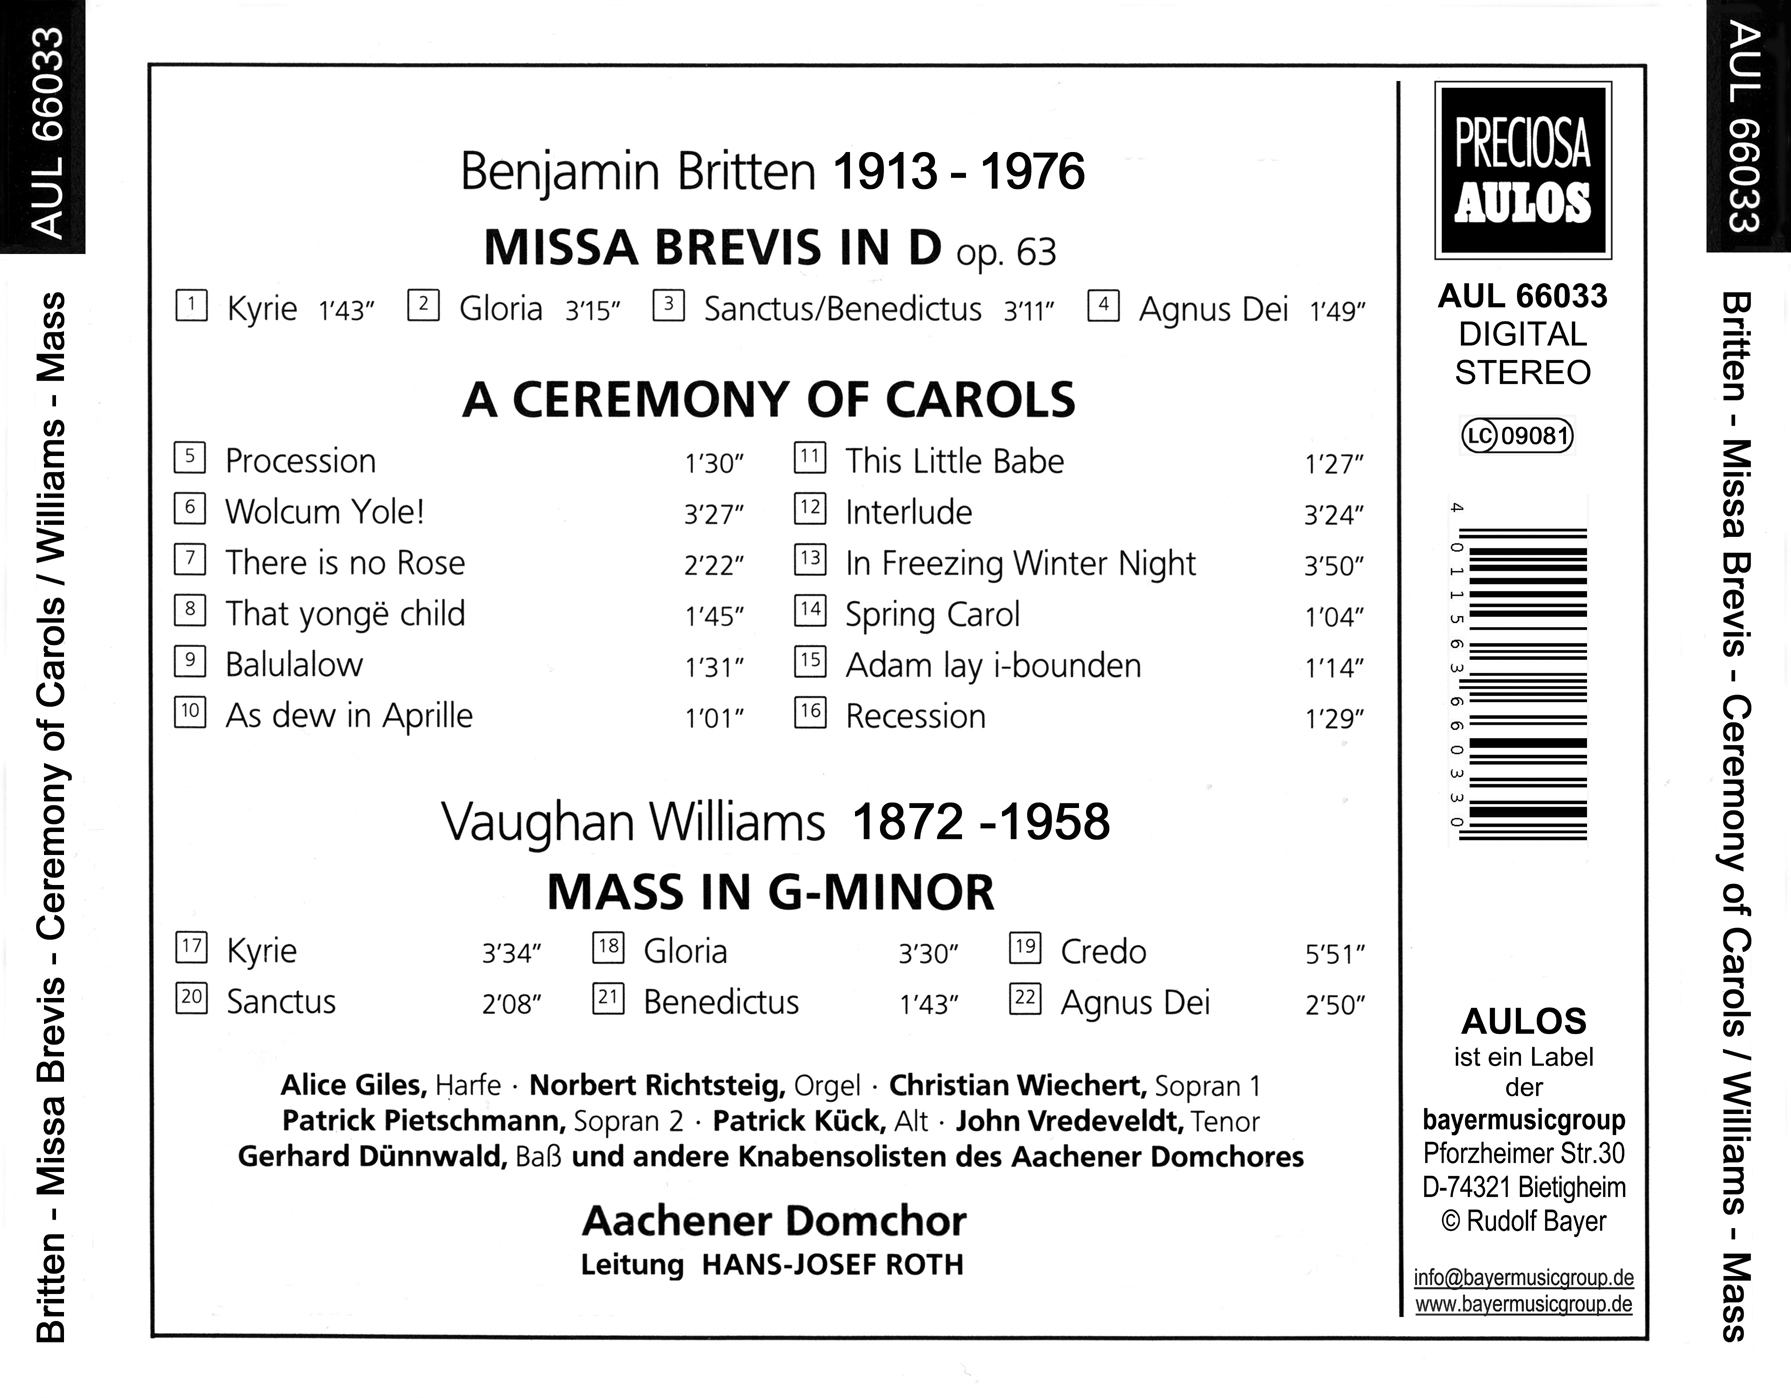 Benjamin Britten - Missa brevis in D